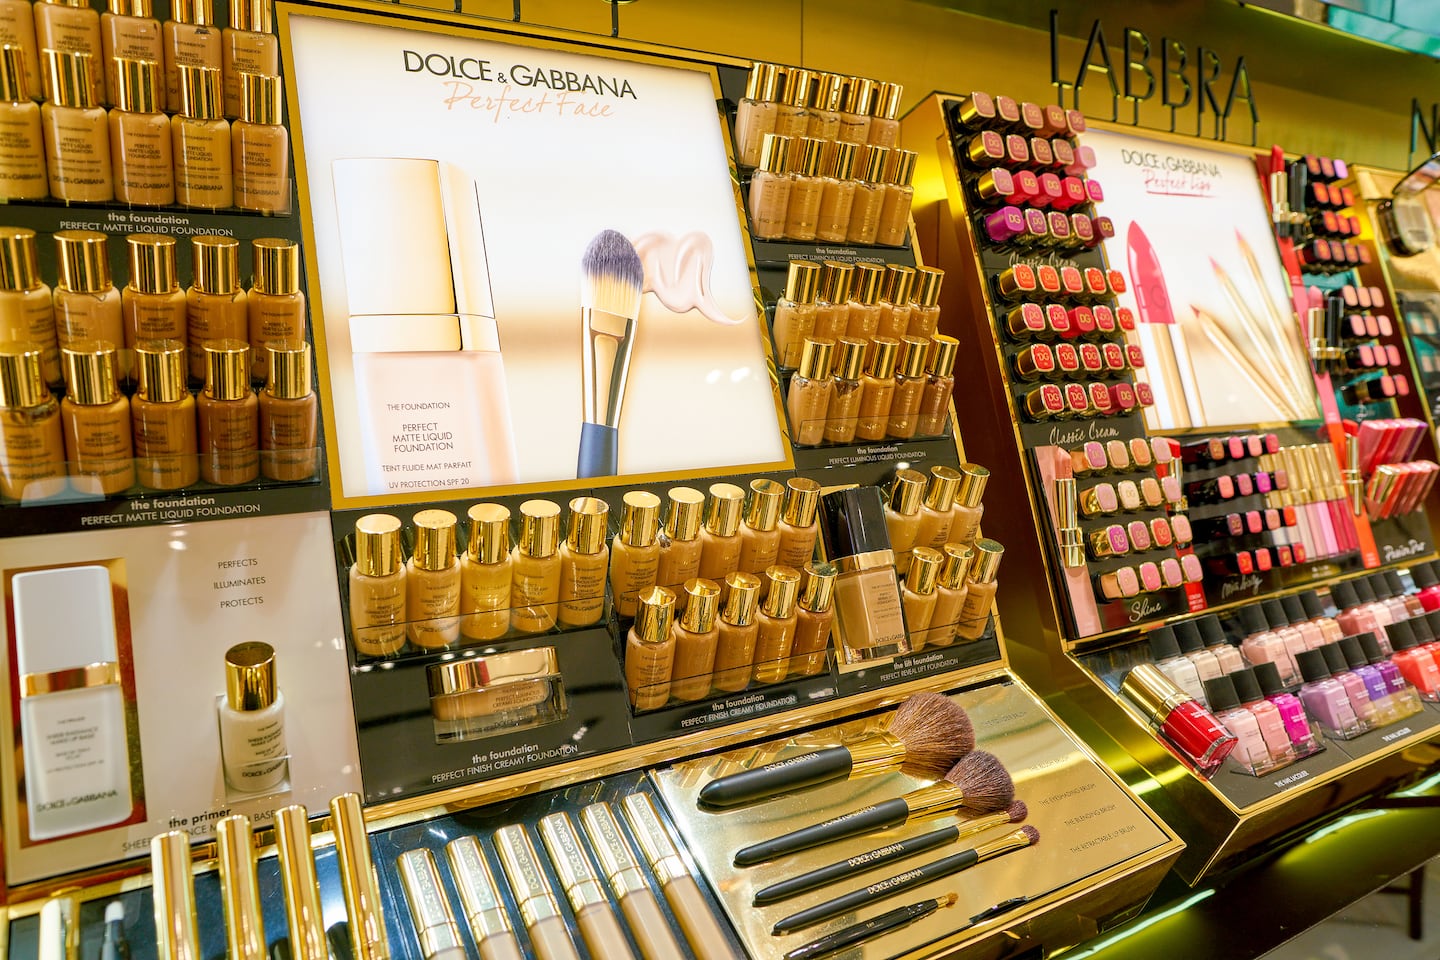 Dolce & Gabbana beauty range. Shutterstock.